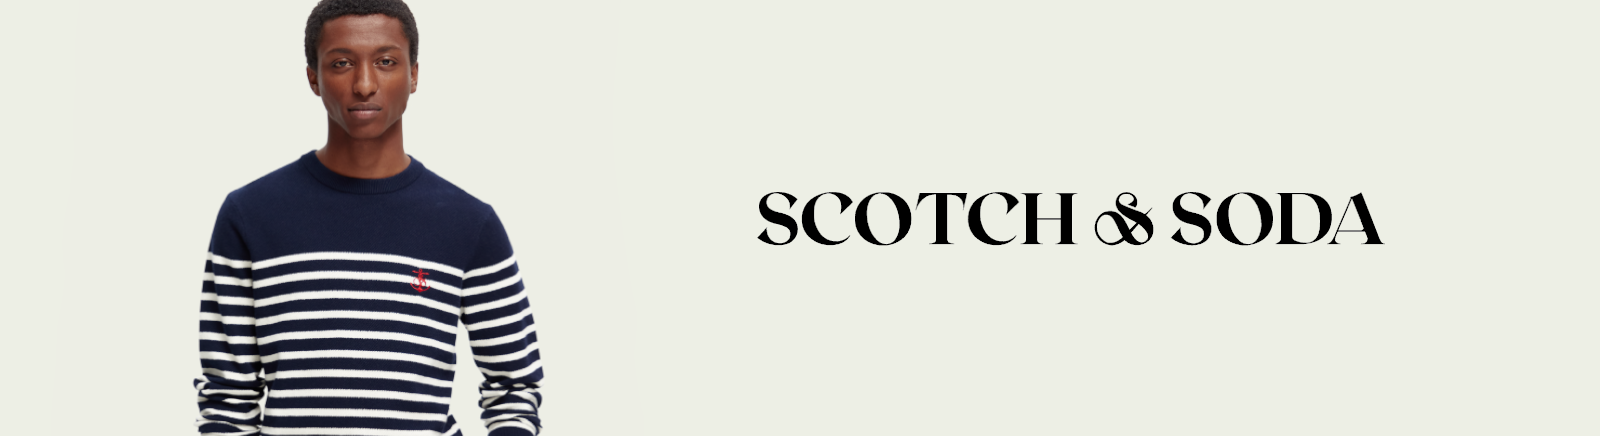 Scotch & Soda Stiefeletten online shoppen im Juppen Shop